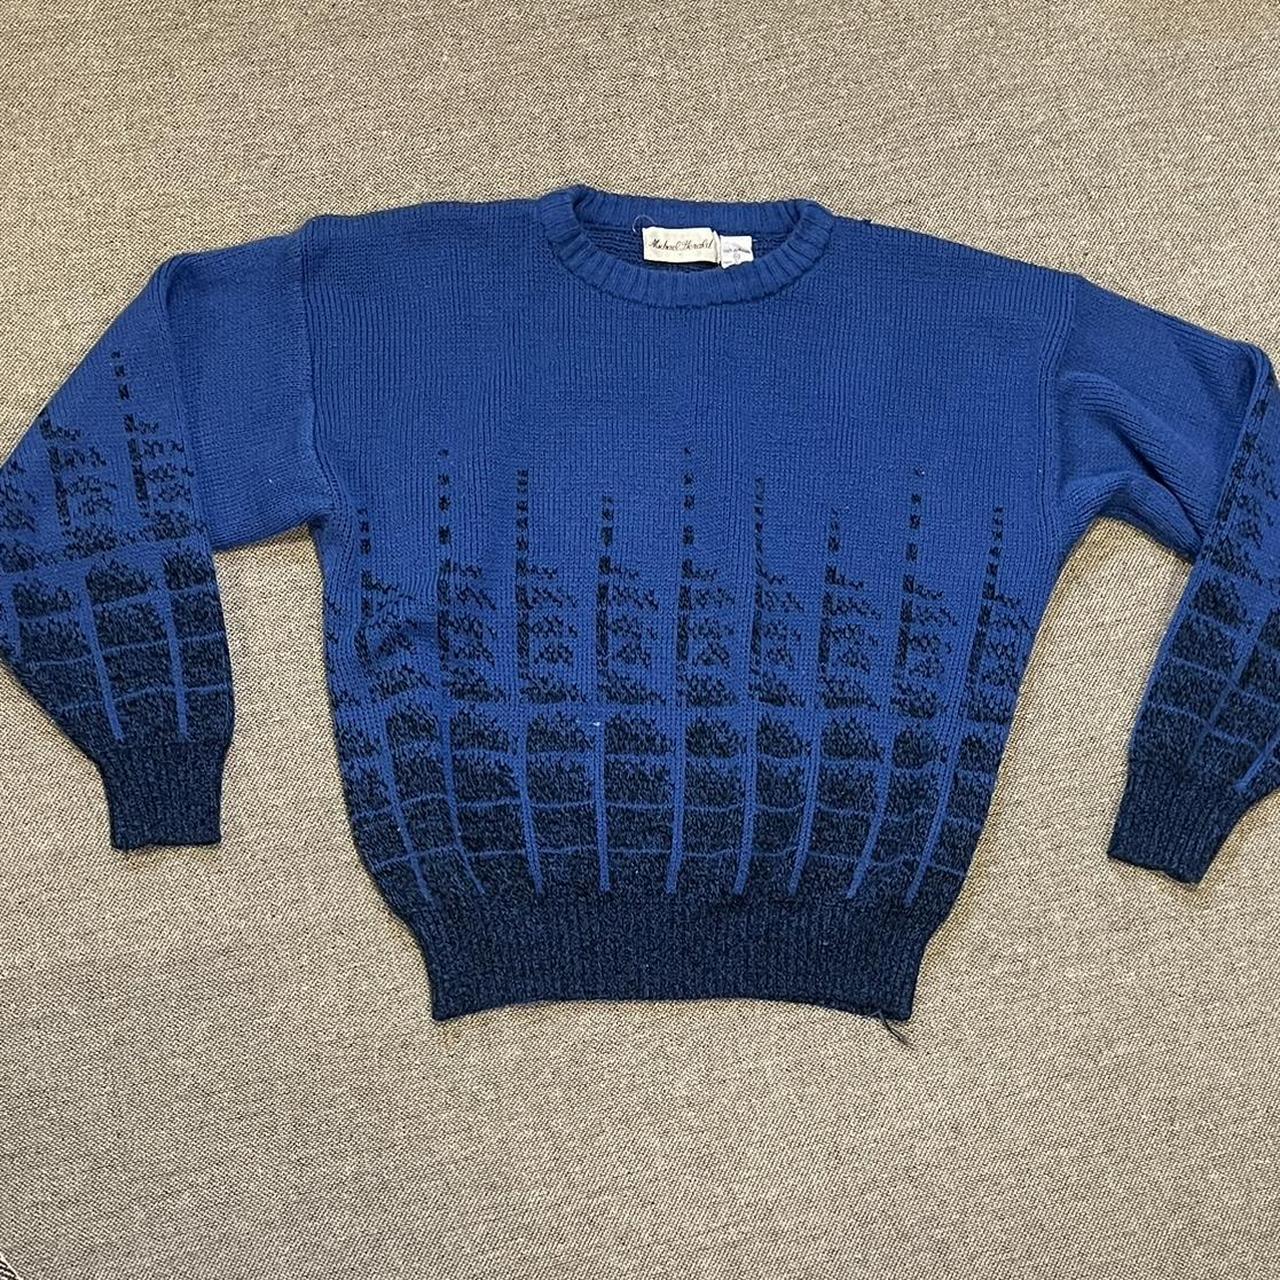 Michael Herald Cuffed Men Blue crazy design sweater... - Depop